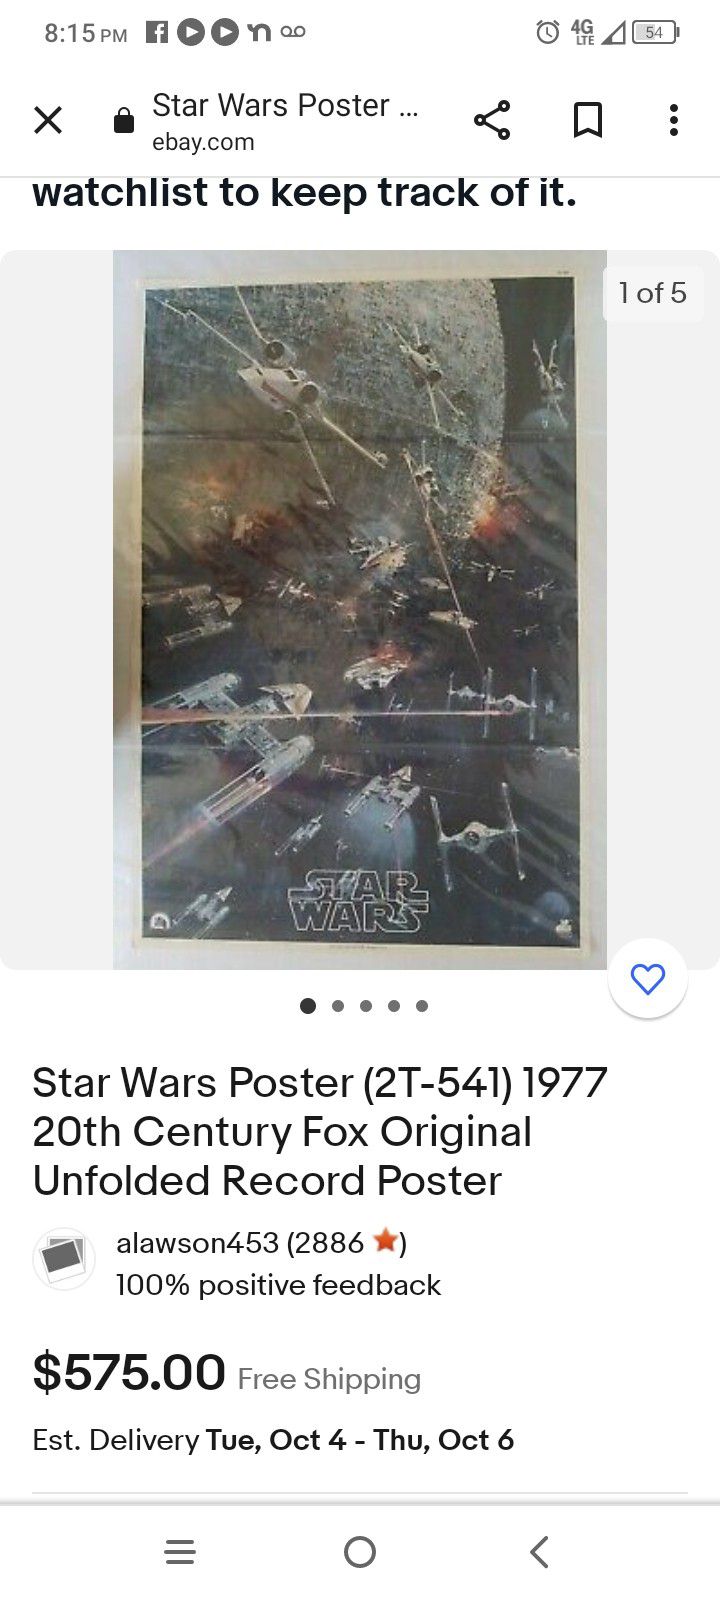 Star Wars Poster (2T-541) 1977 20th Century Fox Original Record Poster


